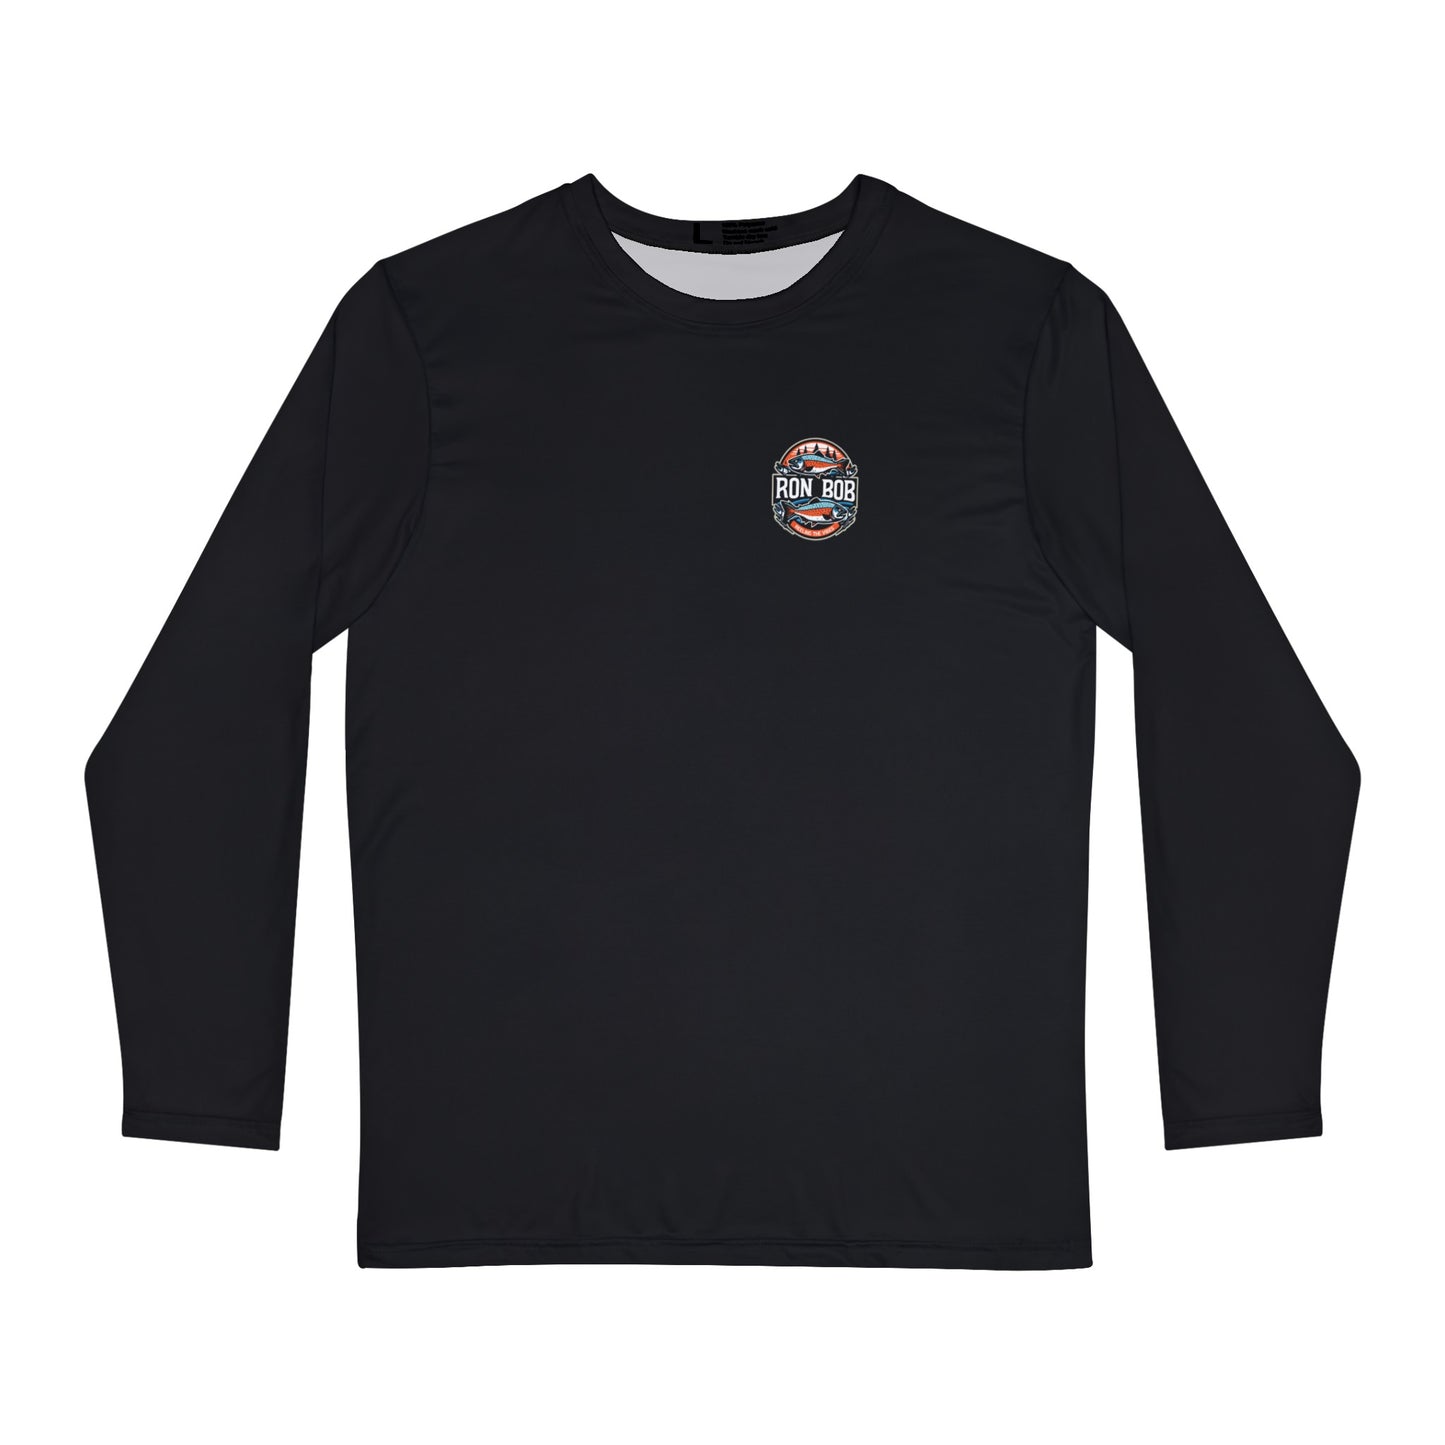 Polyester PacNW Vibe Long Sleeve T-Shirt (Black)